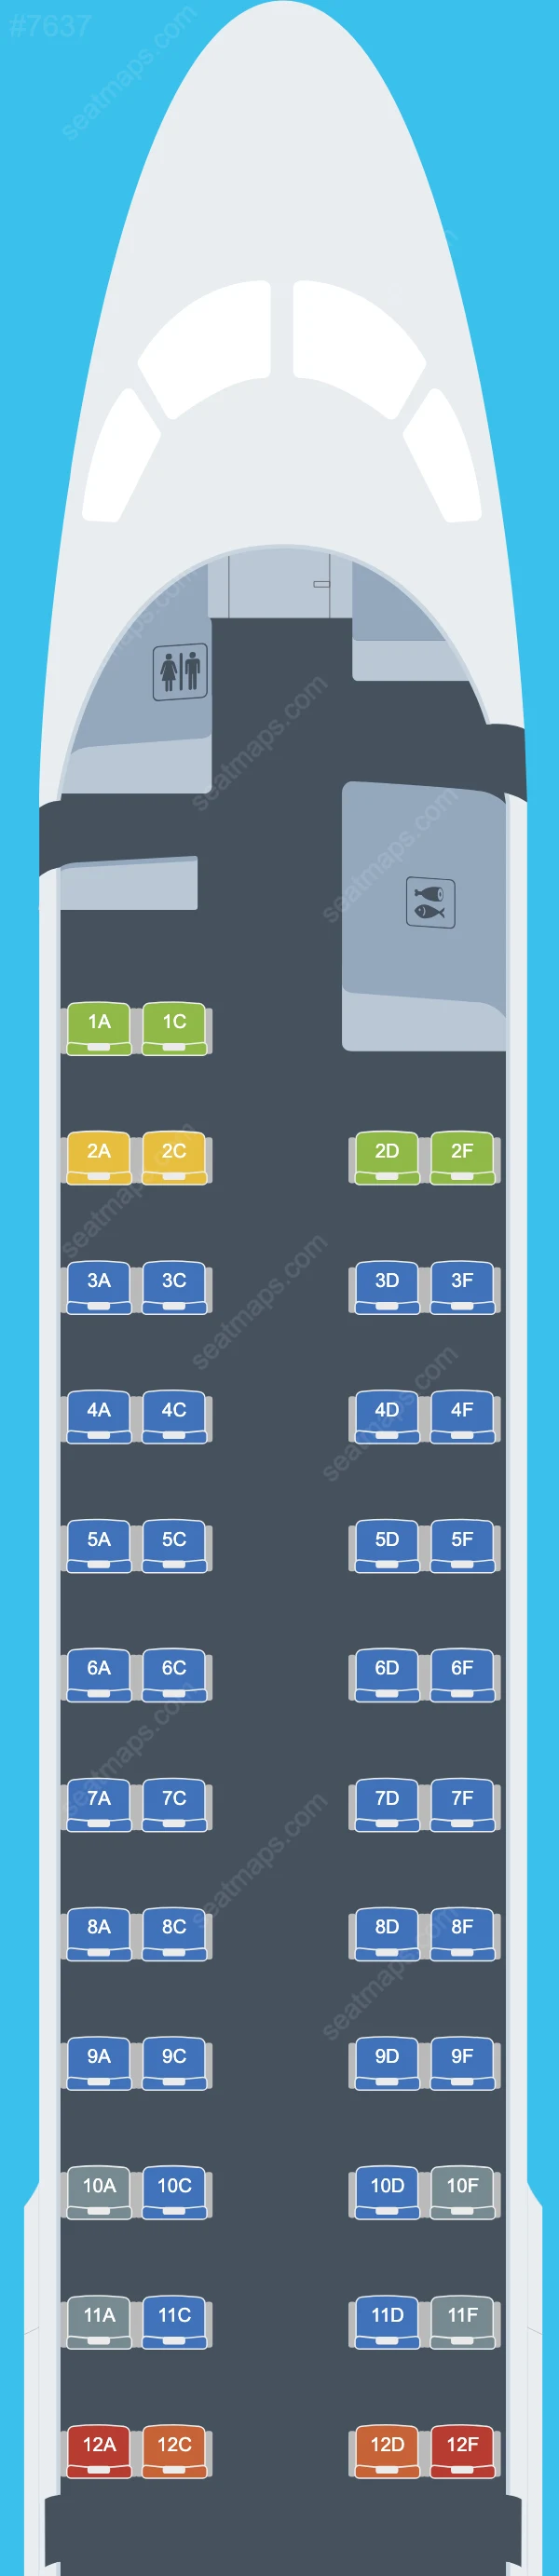 Схема салонов GX Airlines в самолетах Embraer E190 E190